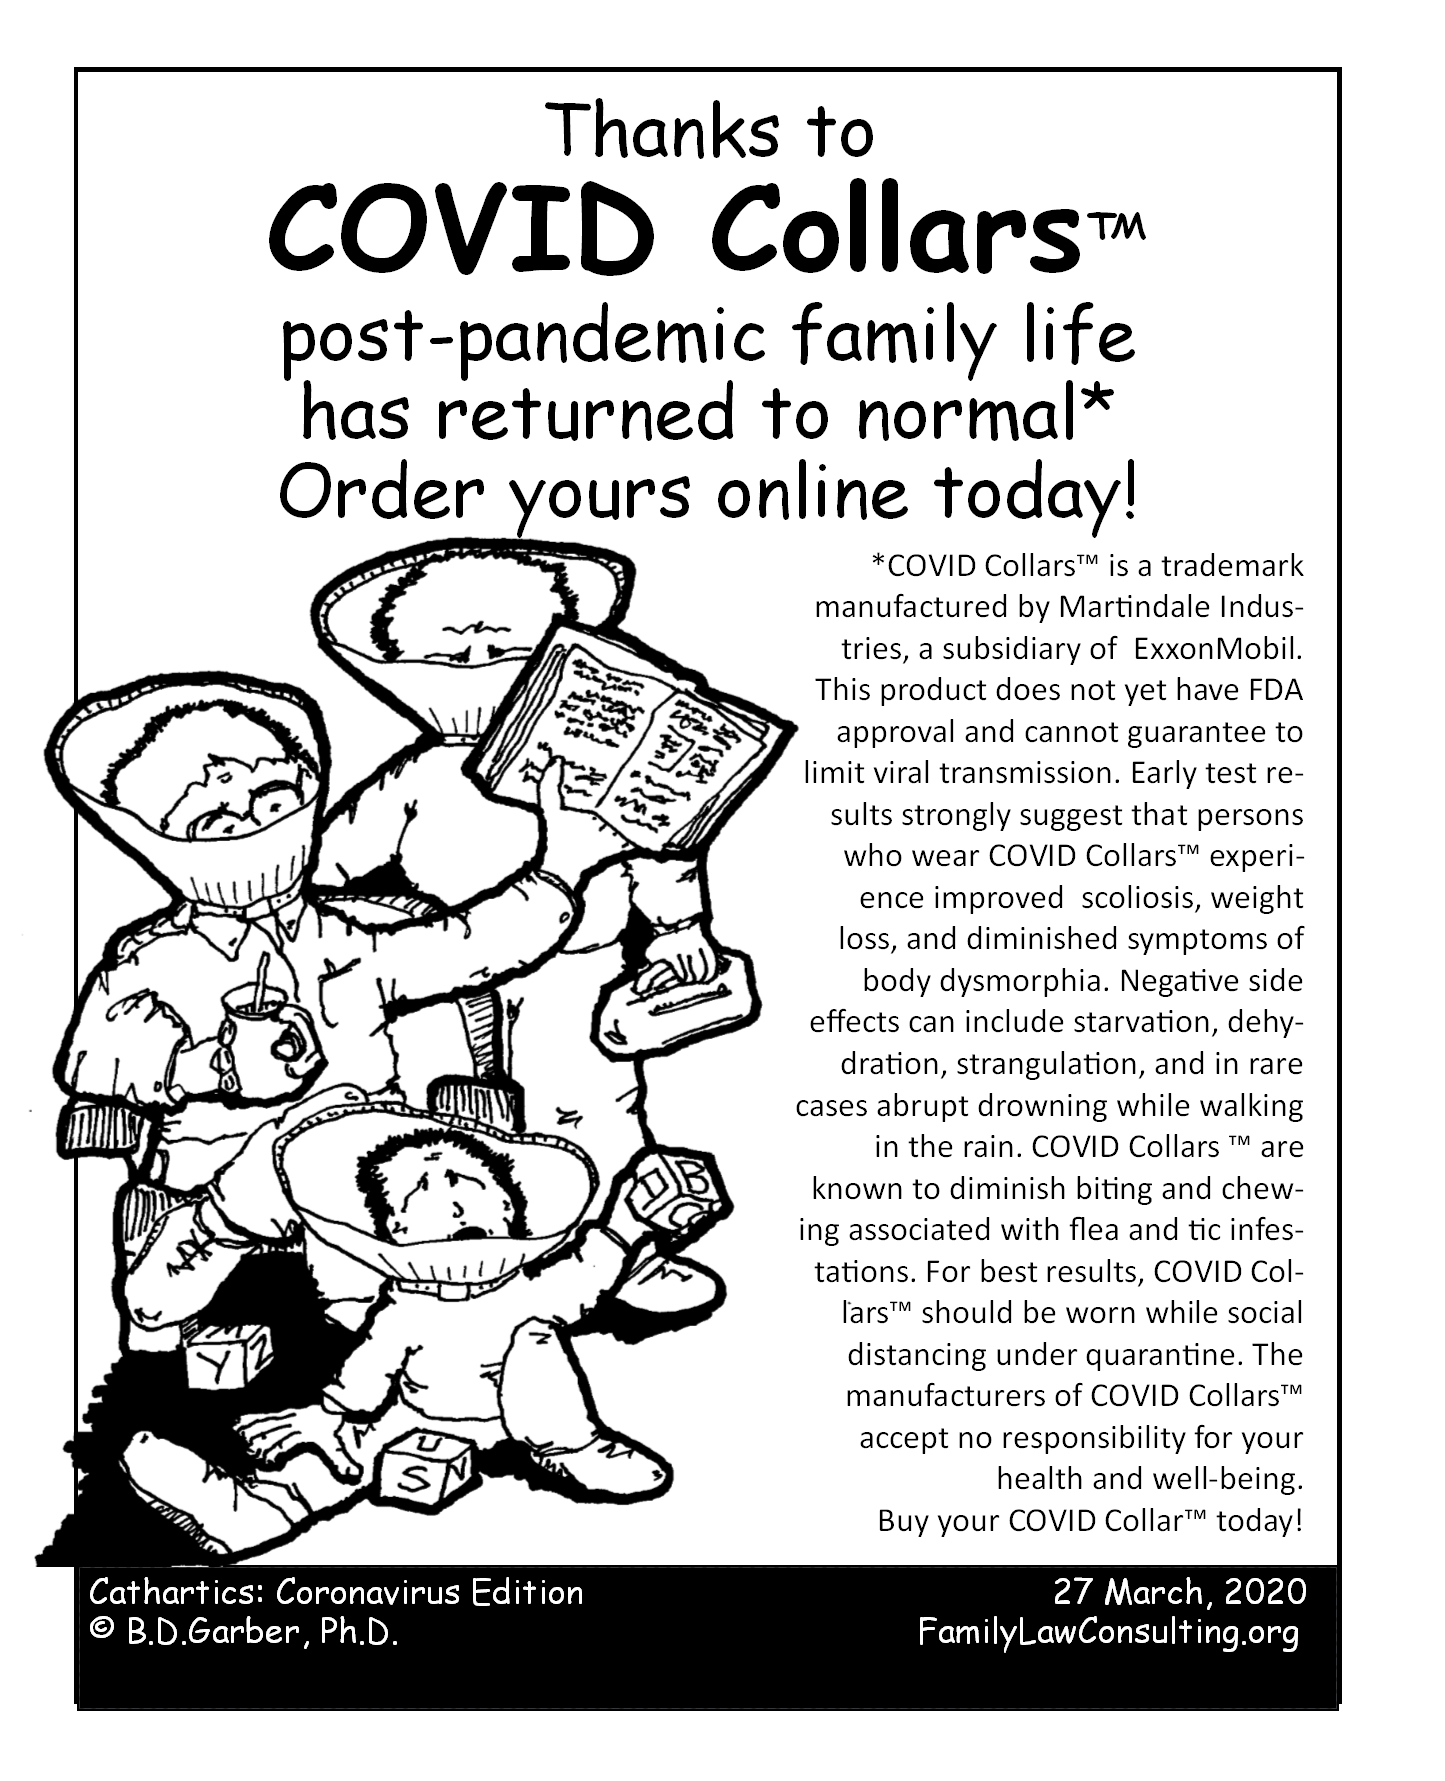 COVID collars